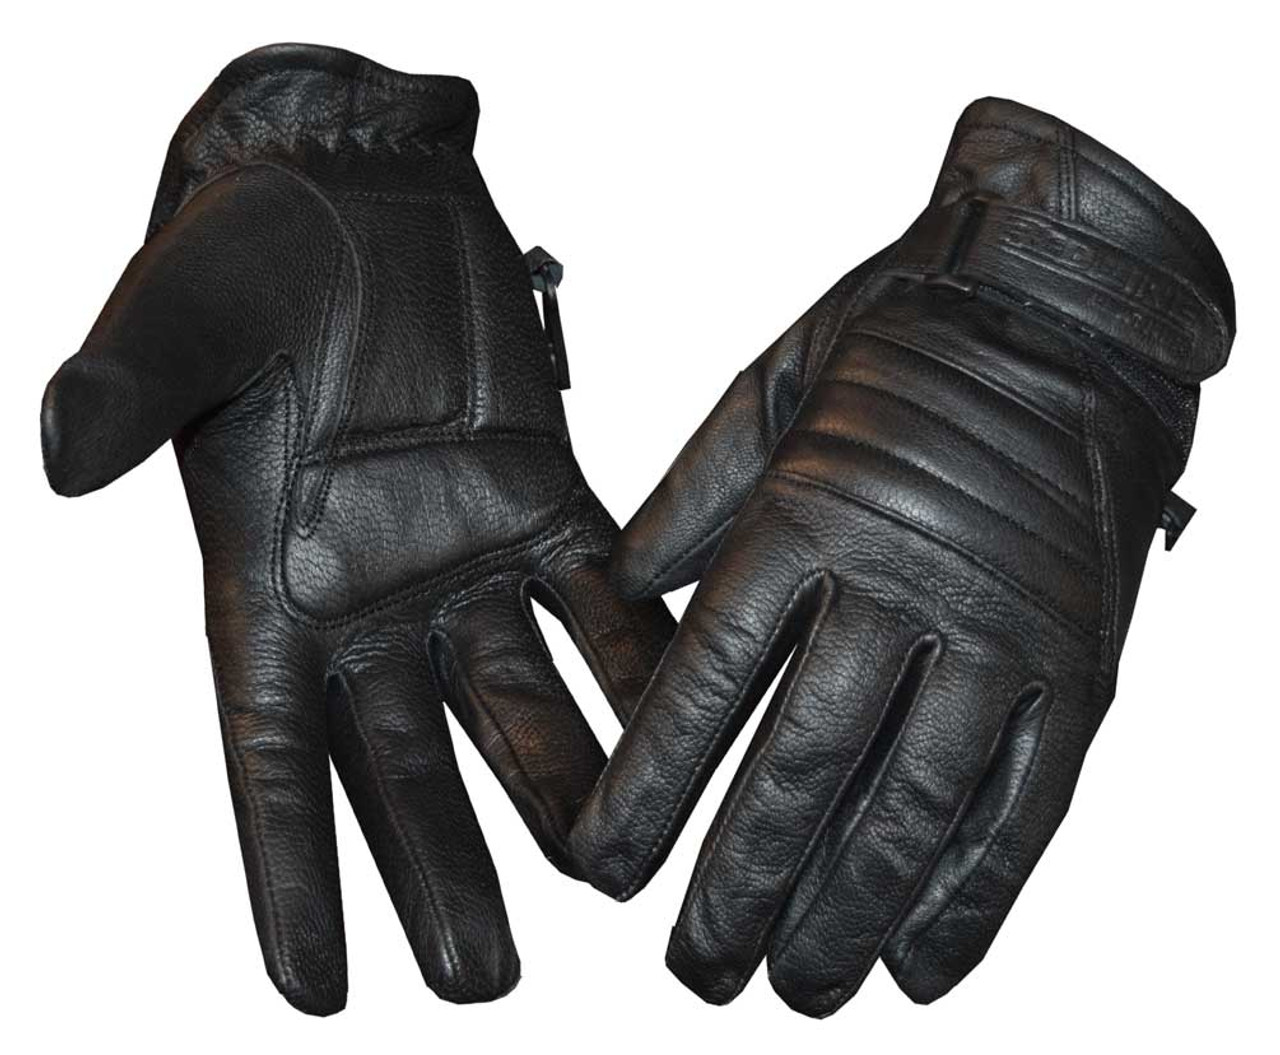 soft black leather gloves